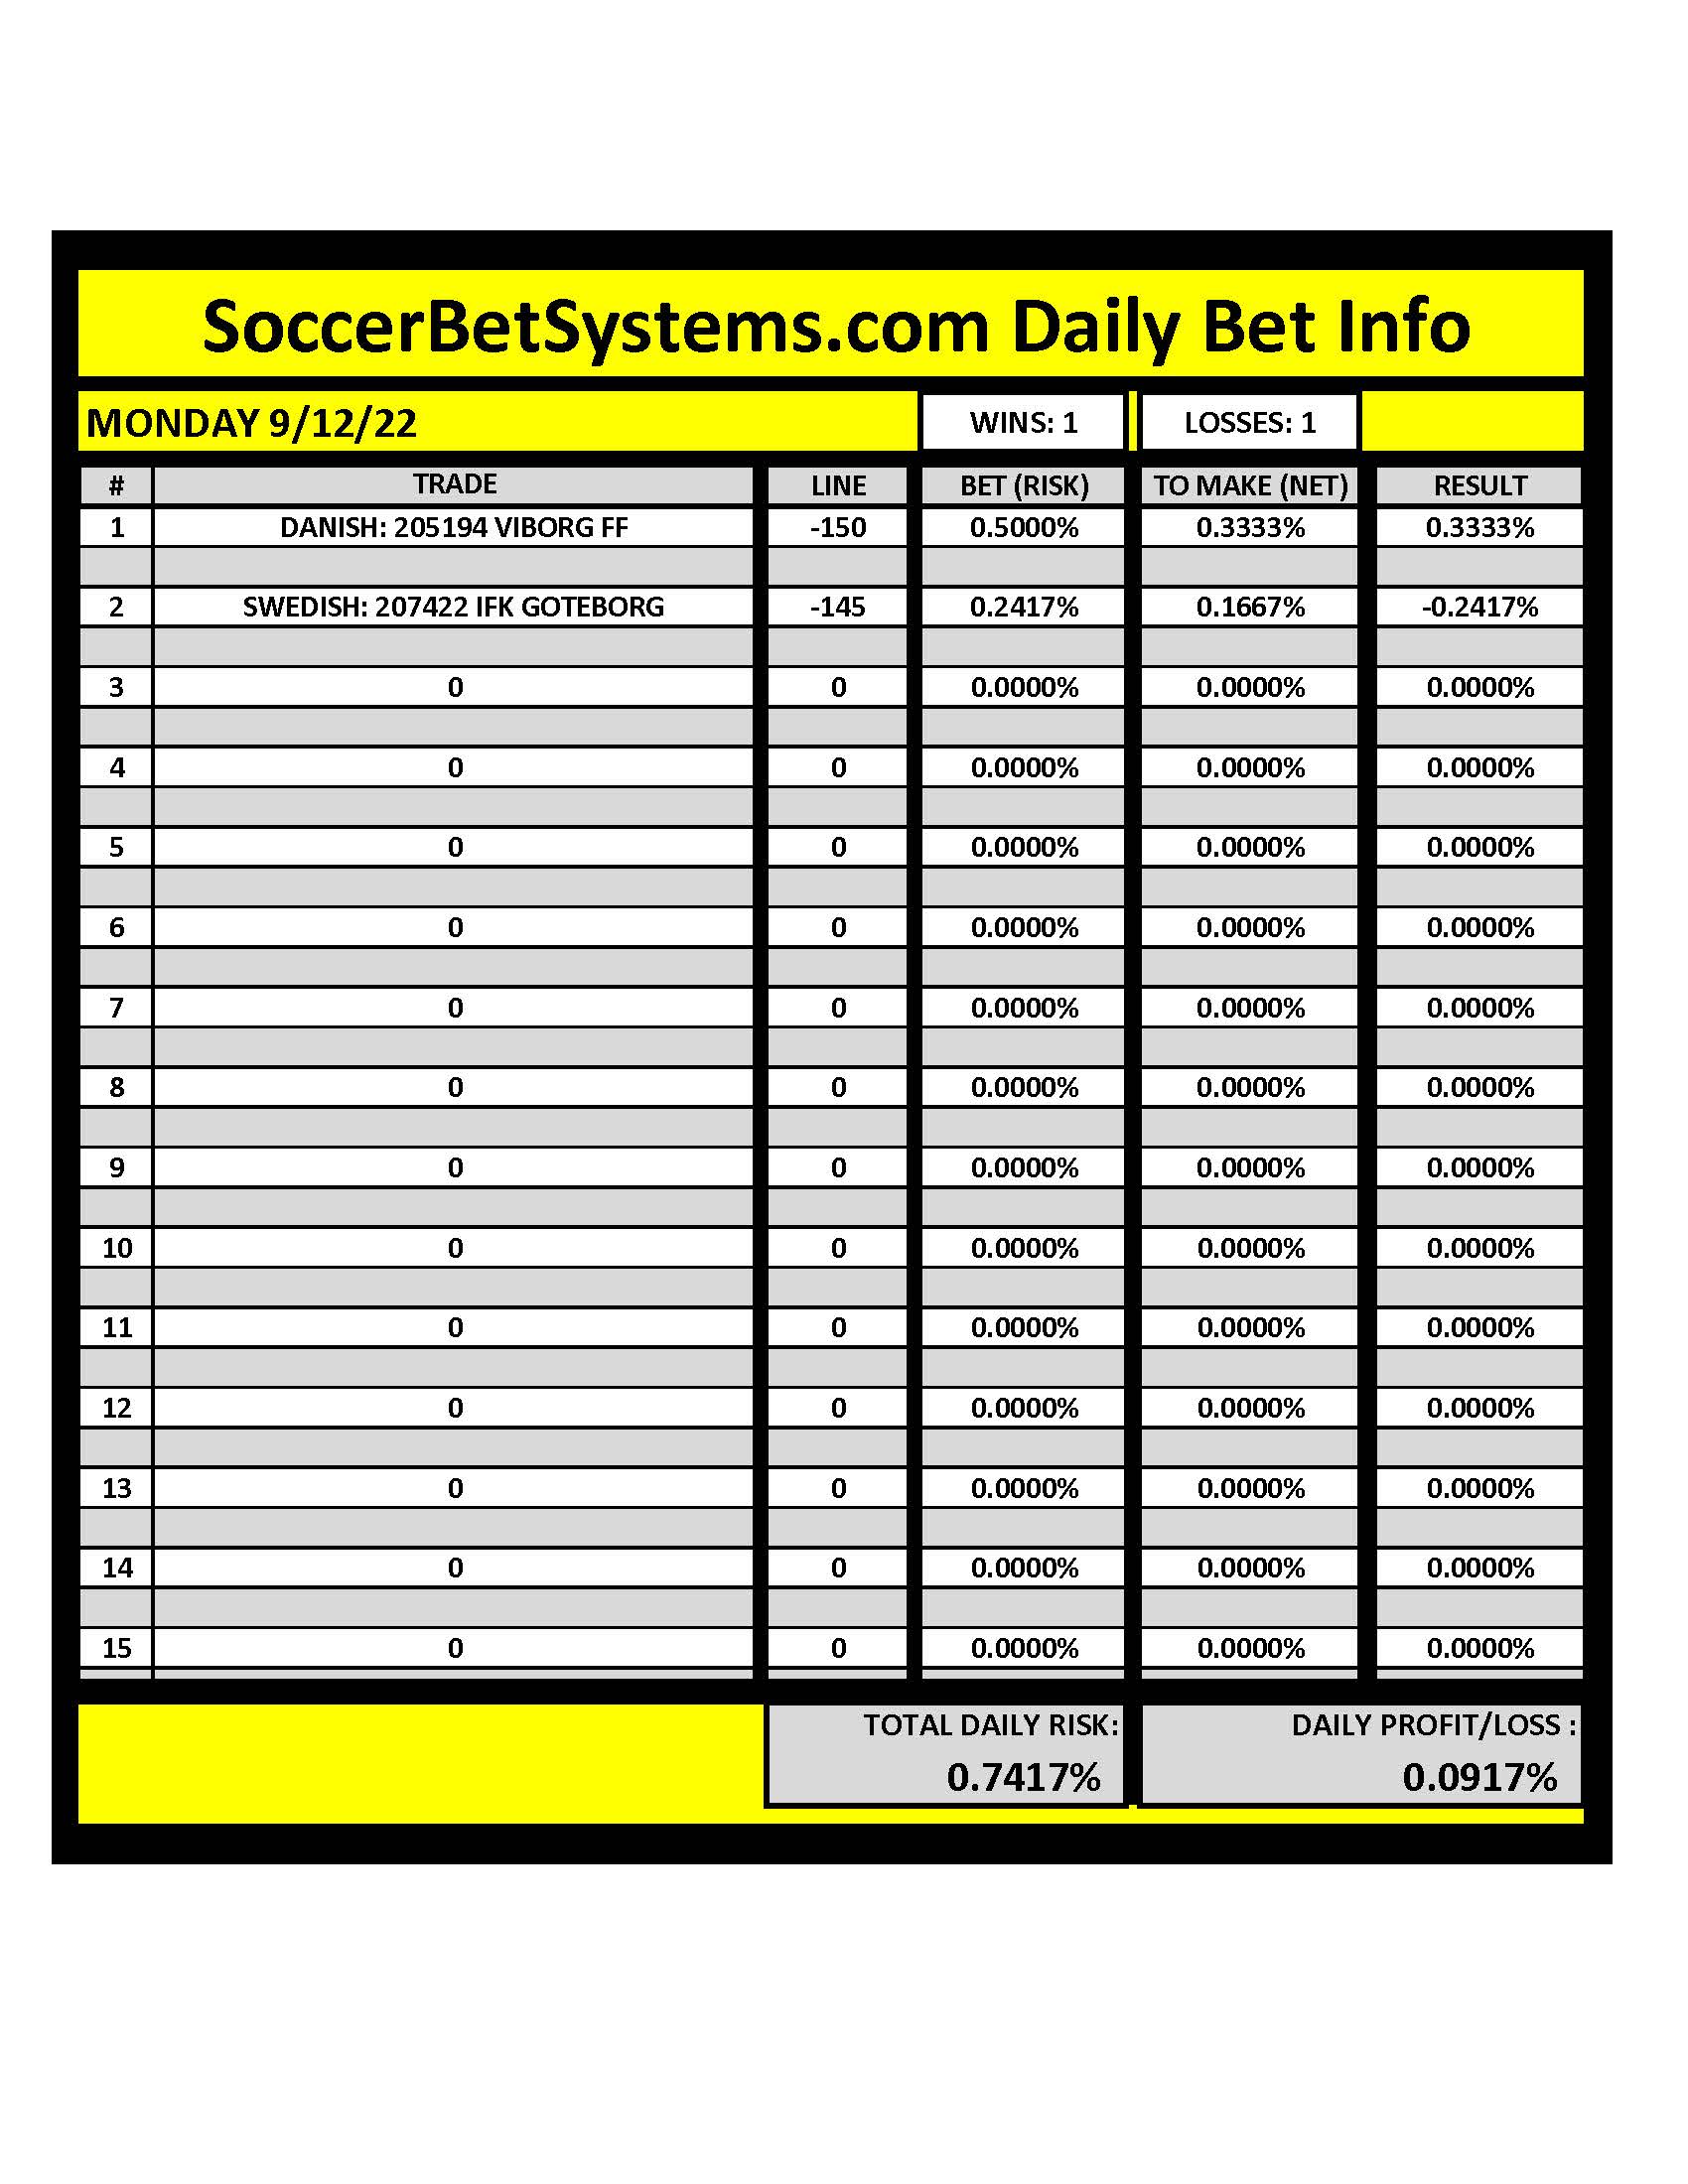 SoccerBetSystems.com 9/12/22 Daily Results